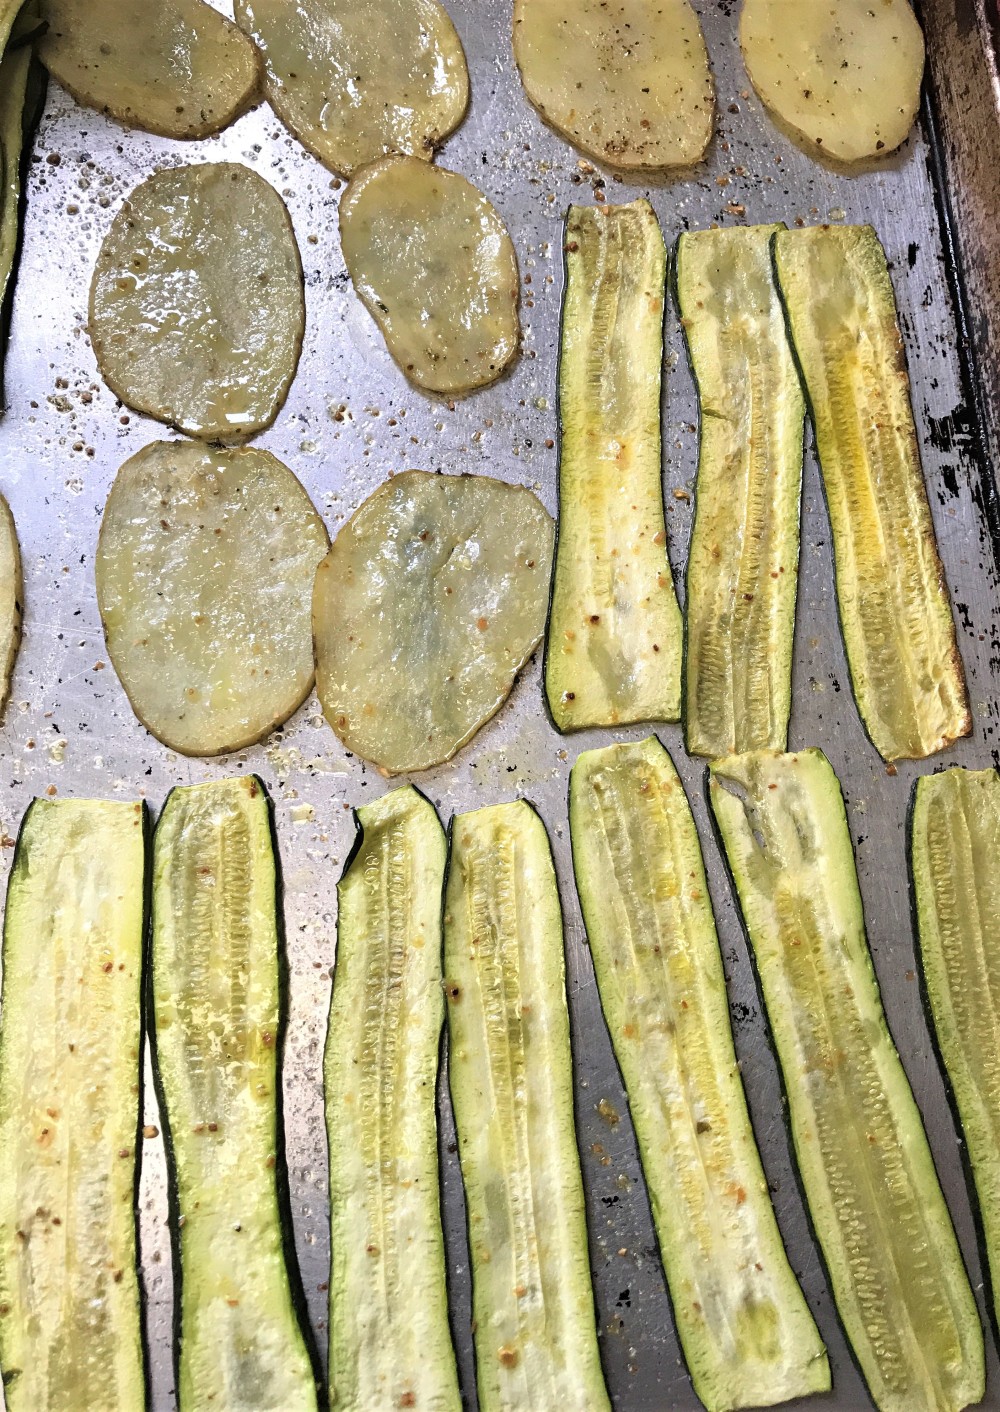 Baked potatoes and zucchini